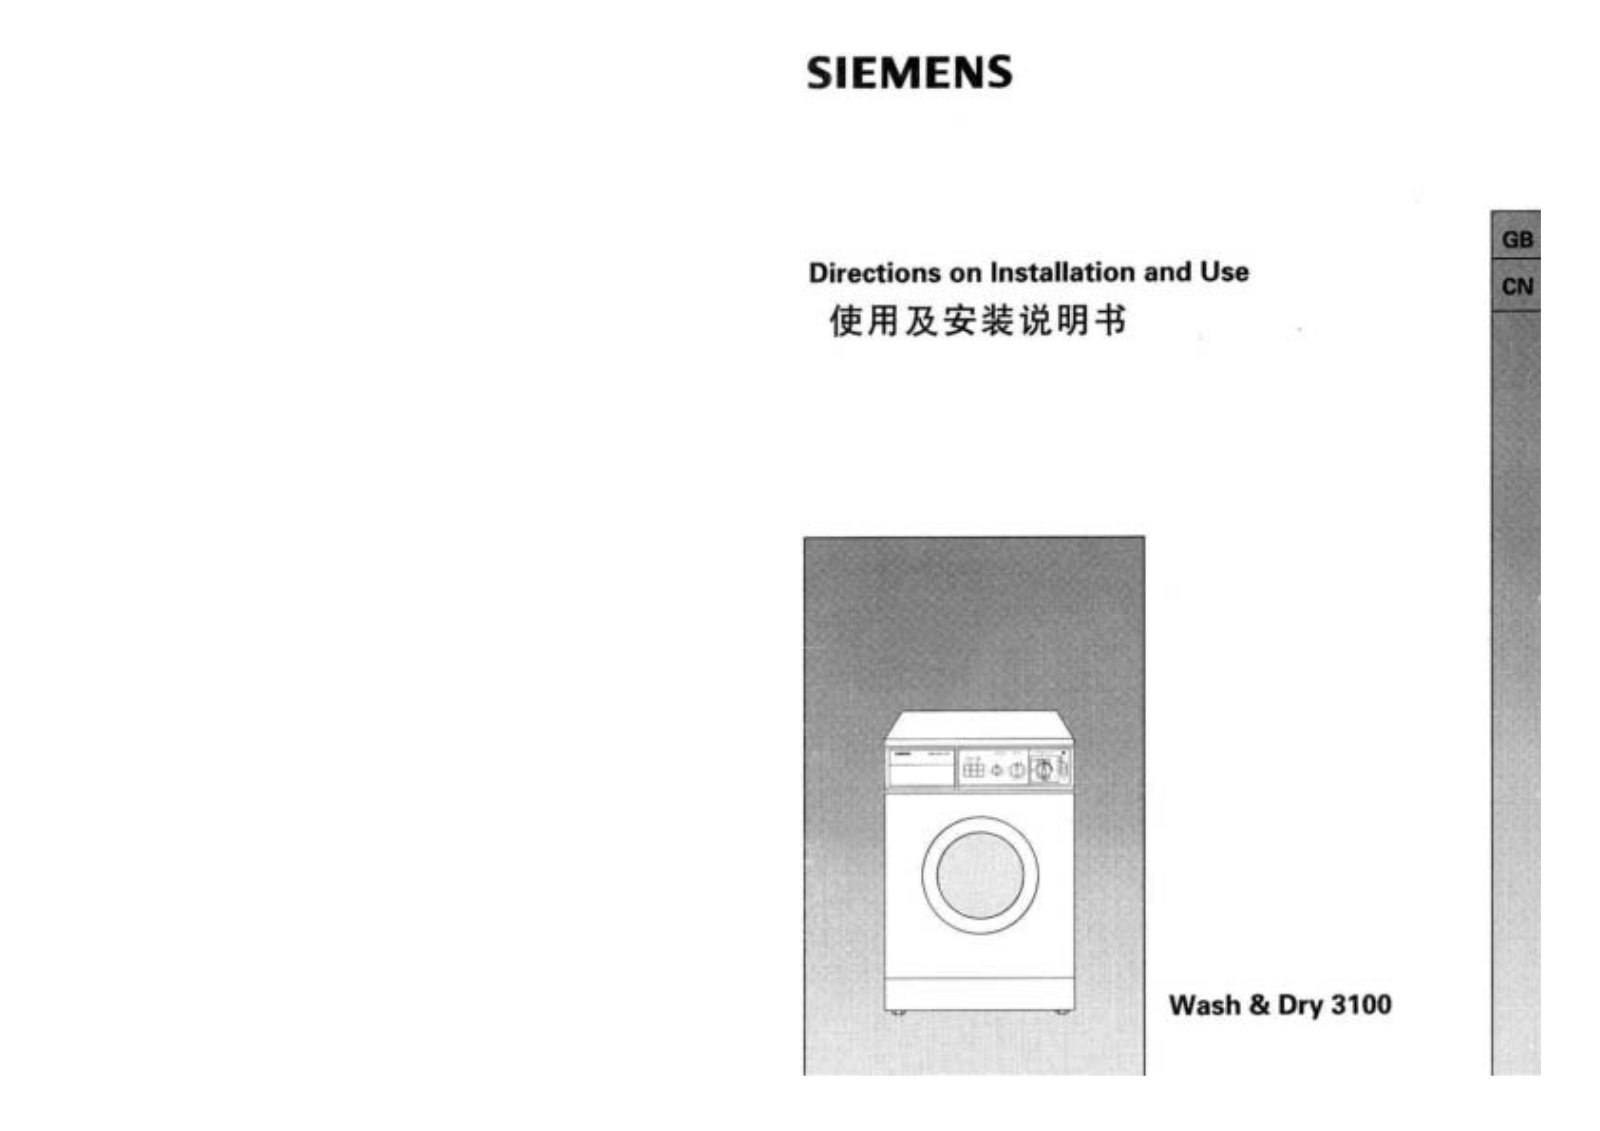 Siemens wash dry 3100 installation Guide